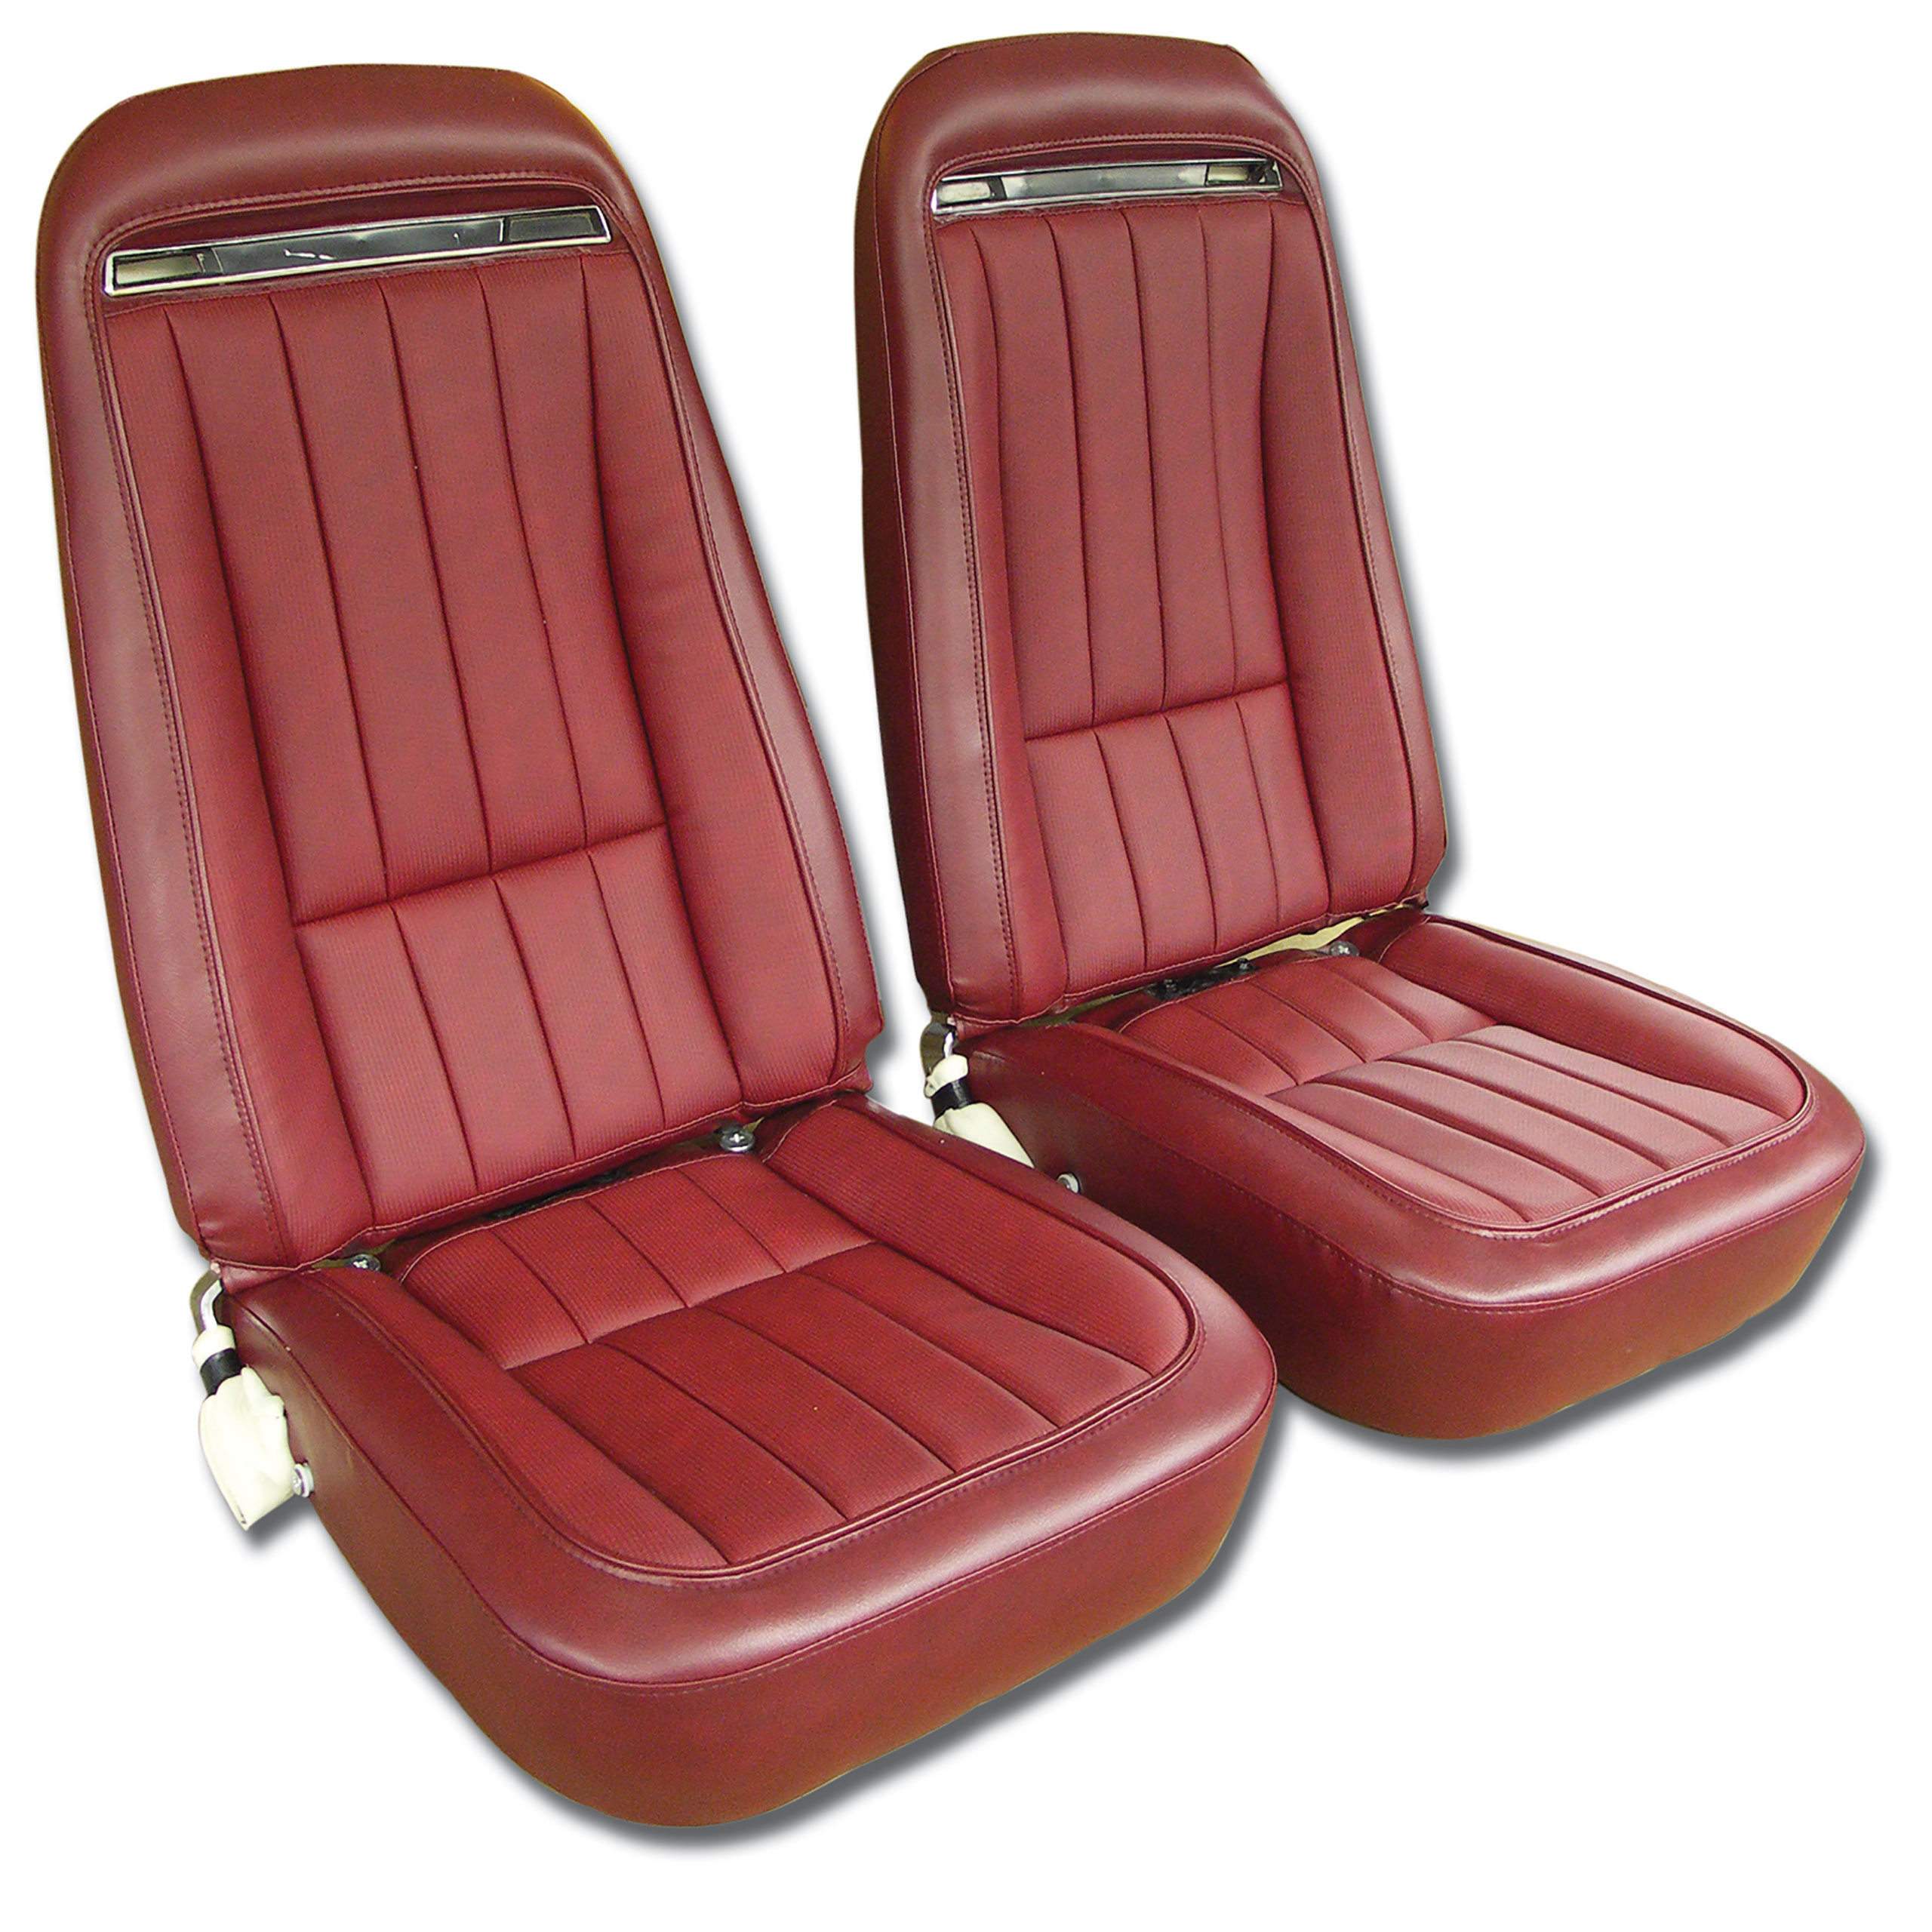 1973-1974 Corvette C3 "Leather-Like" Vinyl Seat Covers Oxblood CA-421331 